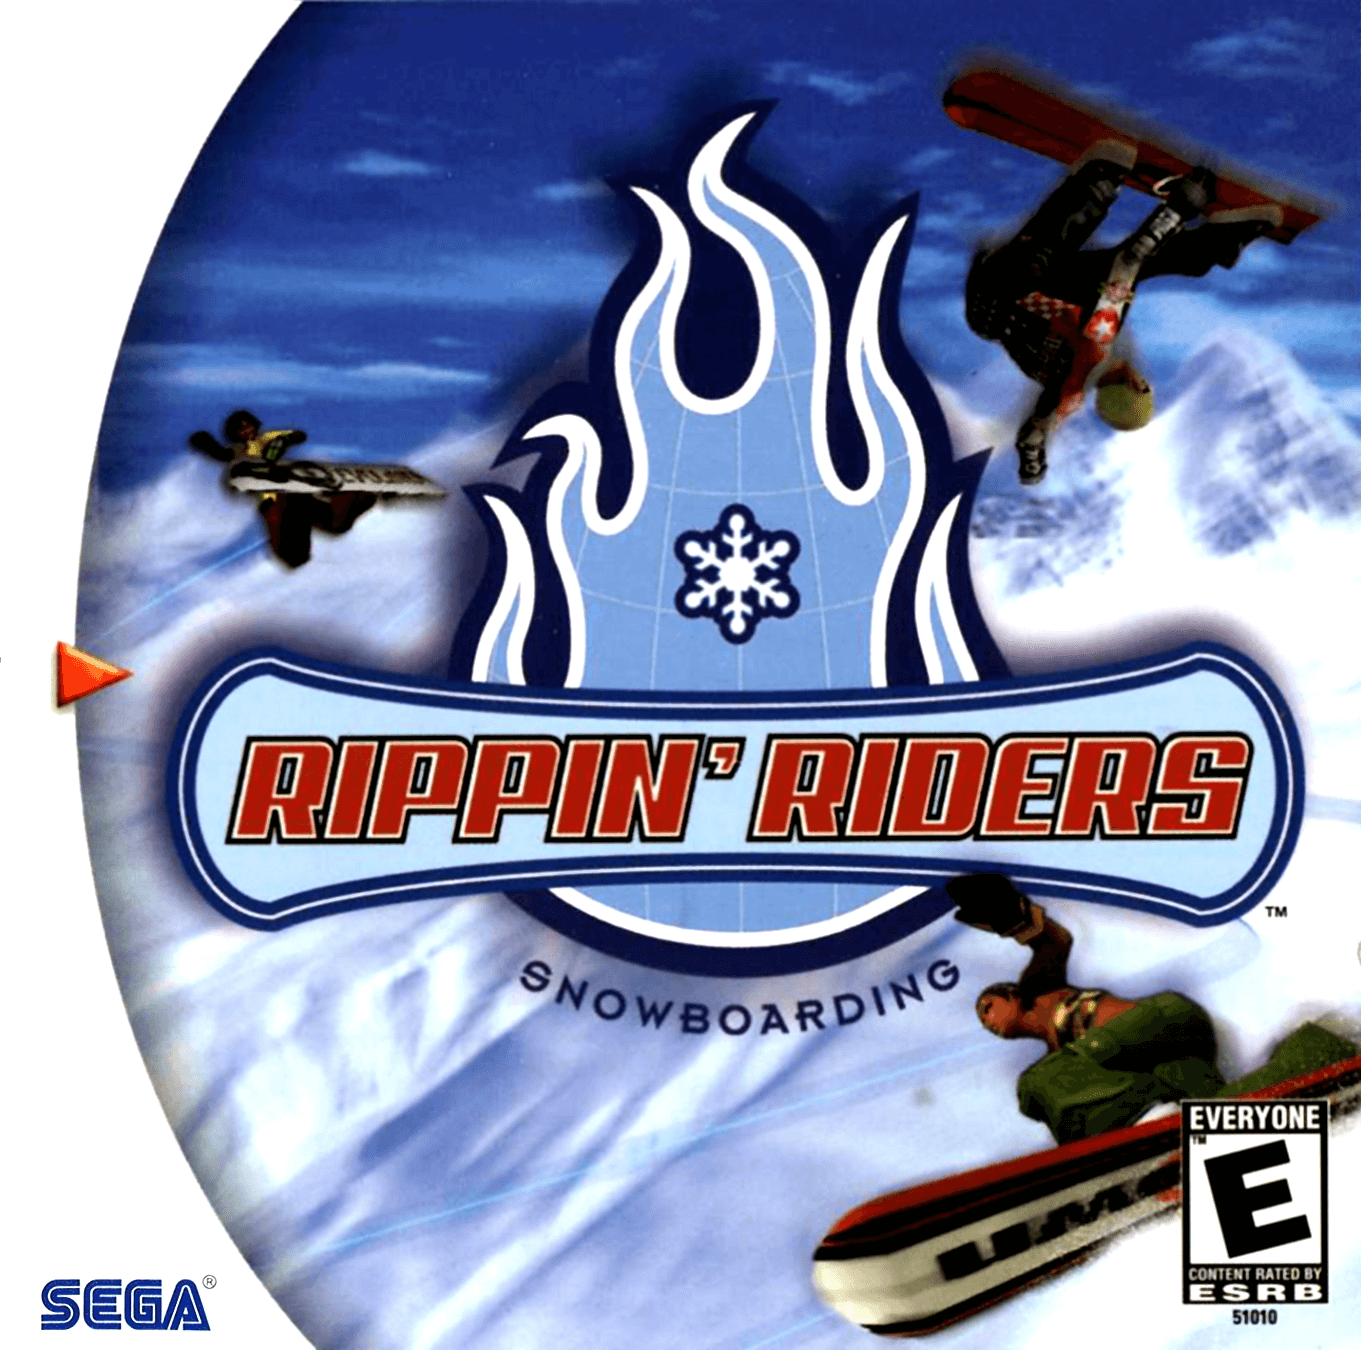 Rippin’ Riders Snowboarding